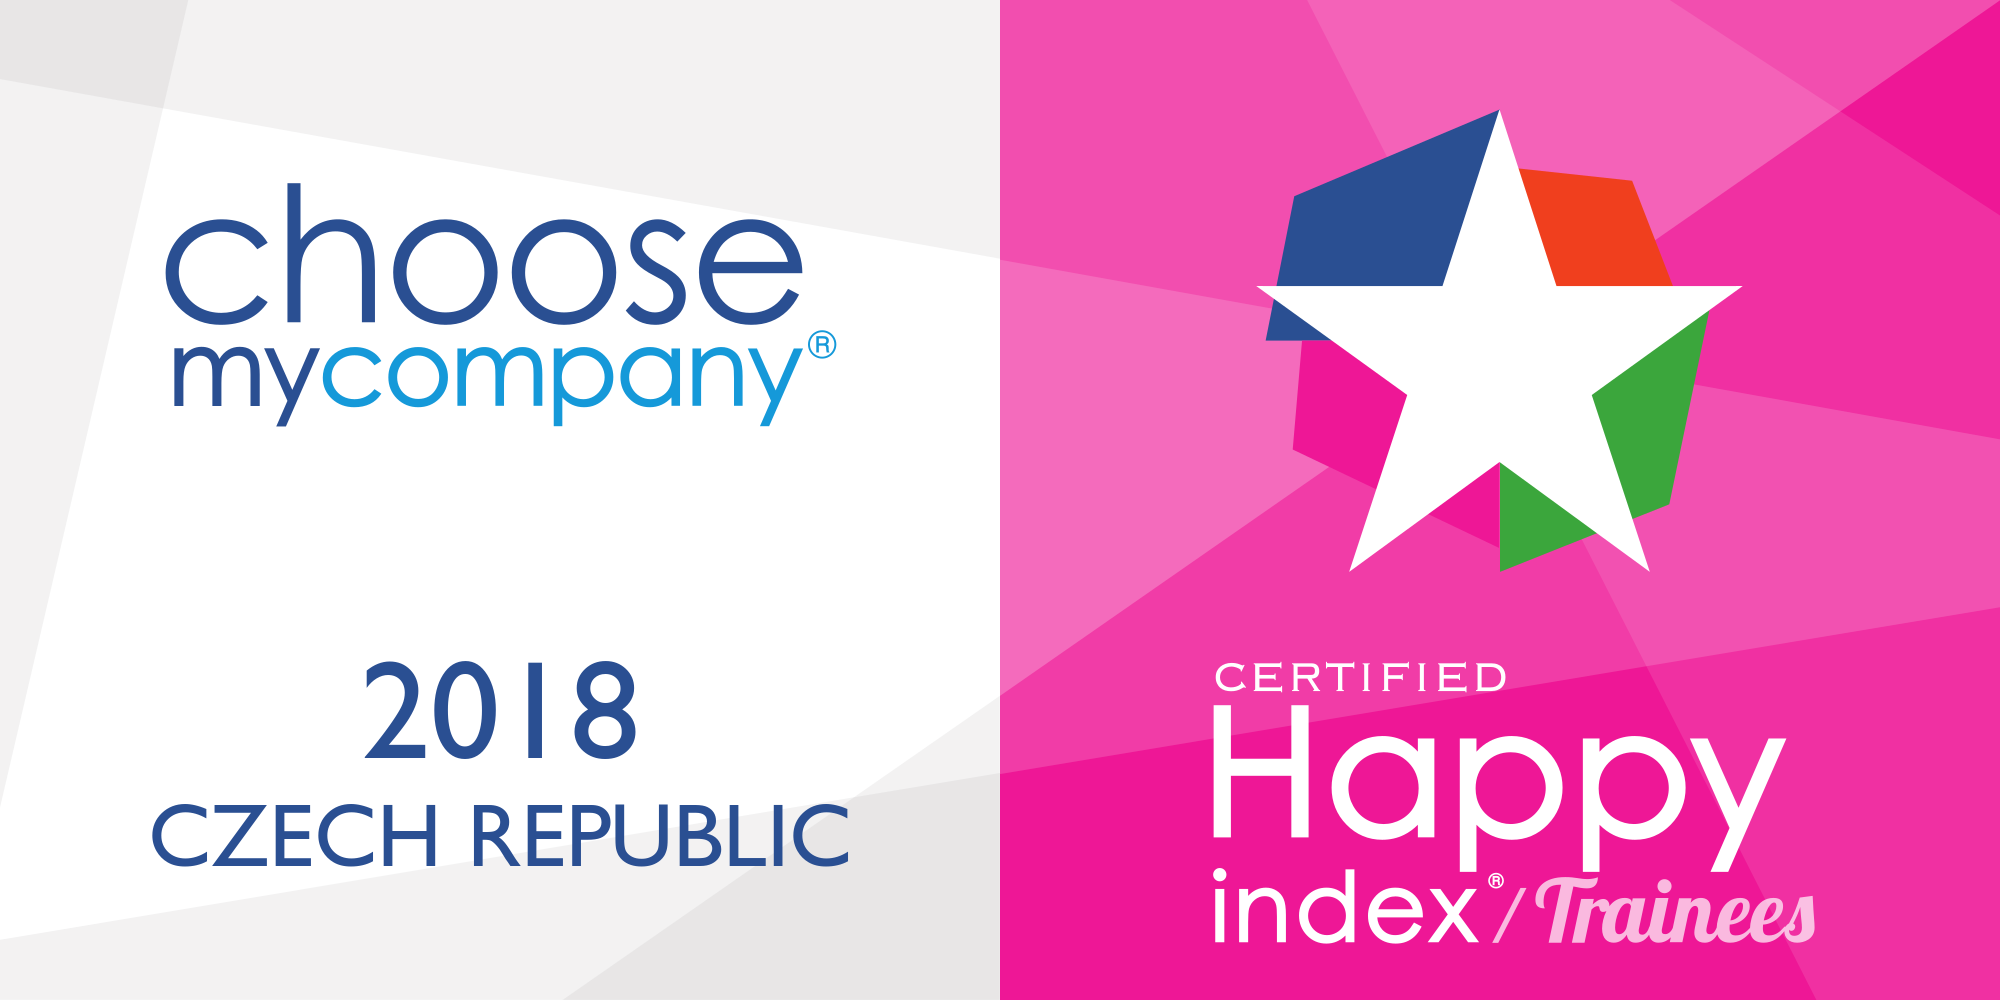 Logo HappyIndex®Trainees | Czech Republic 2018